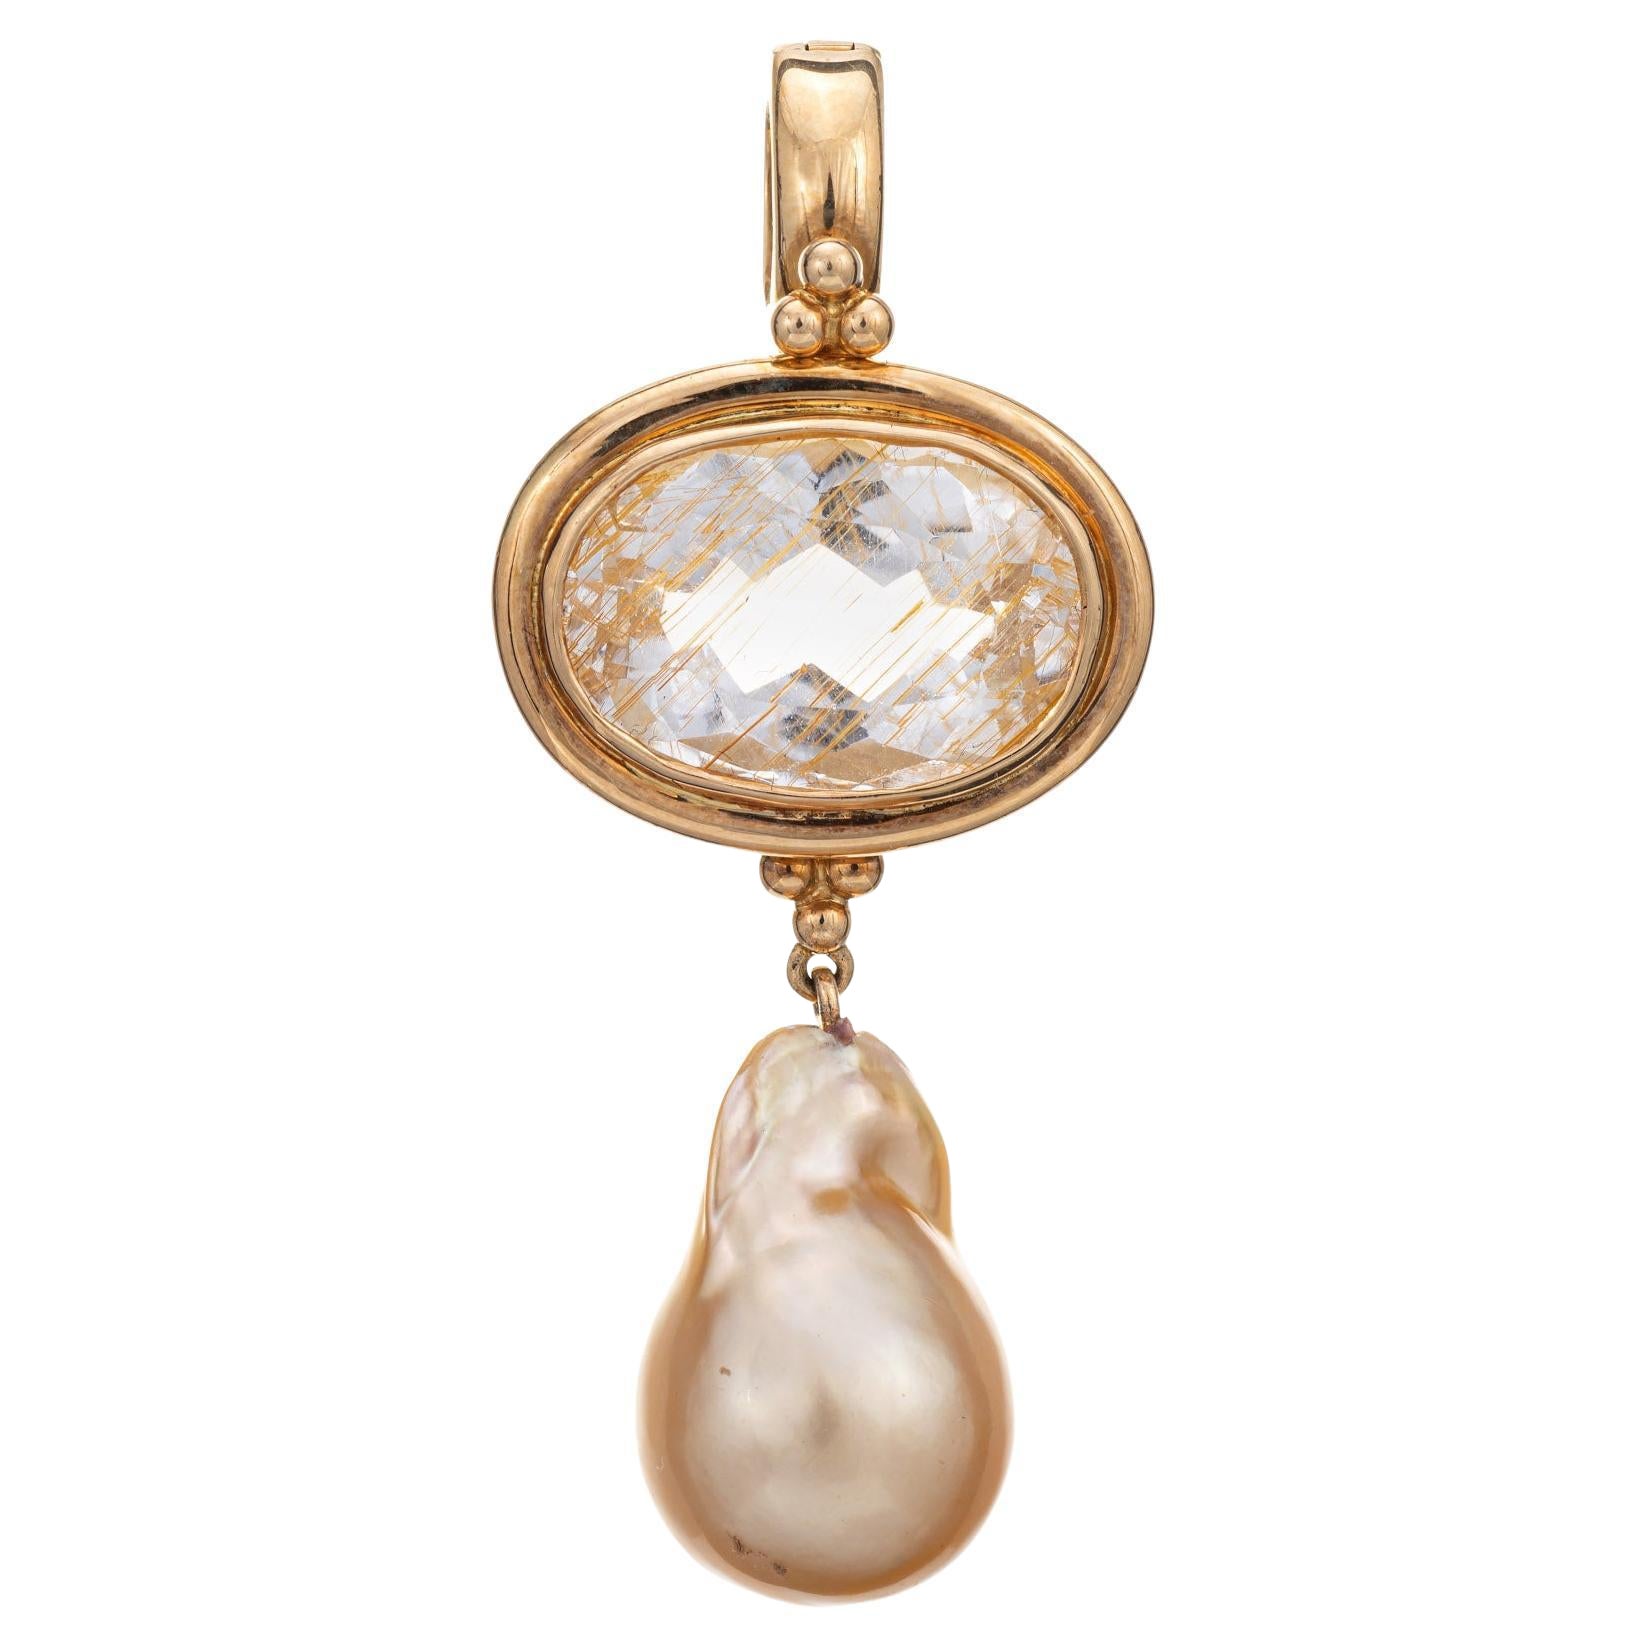 Pendentif pendant baroque en or jaune 14 carats avec perles dorées et quartz rutile